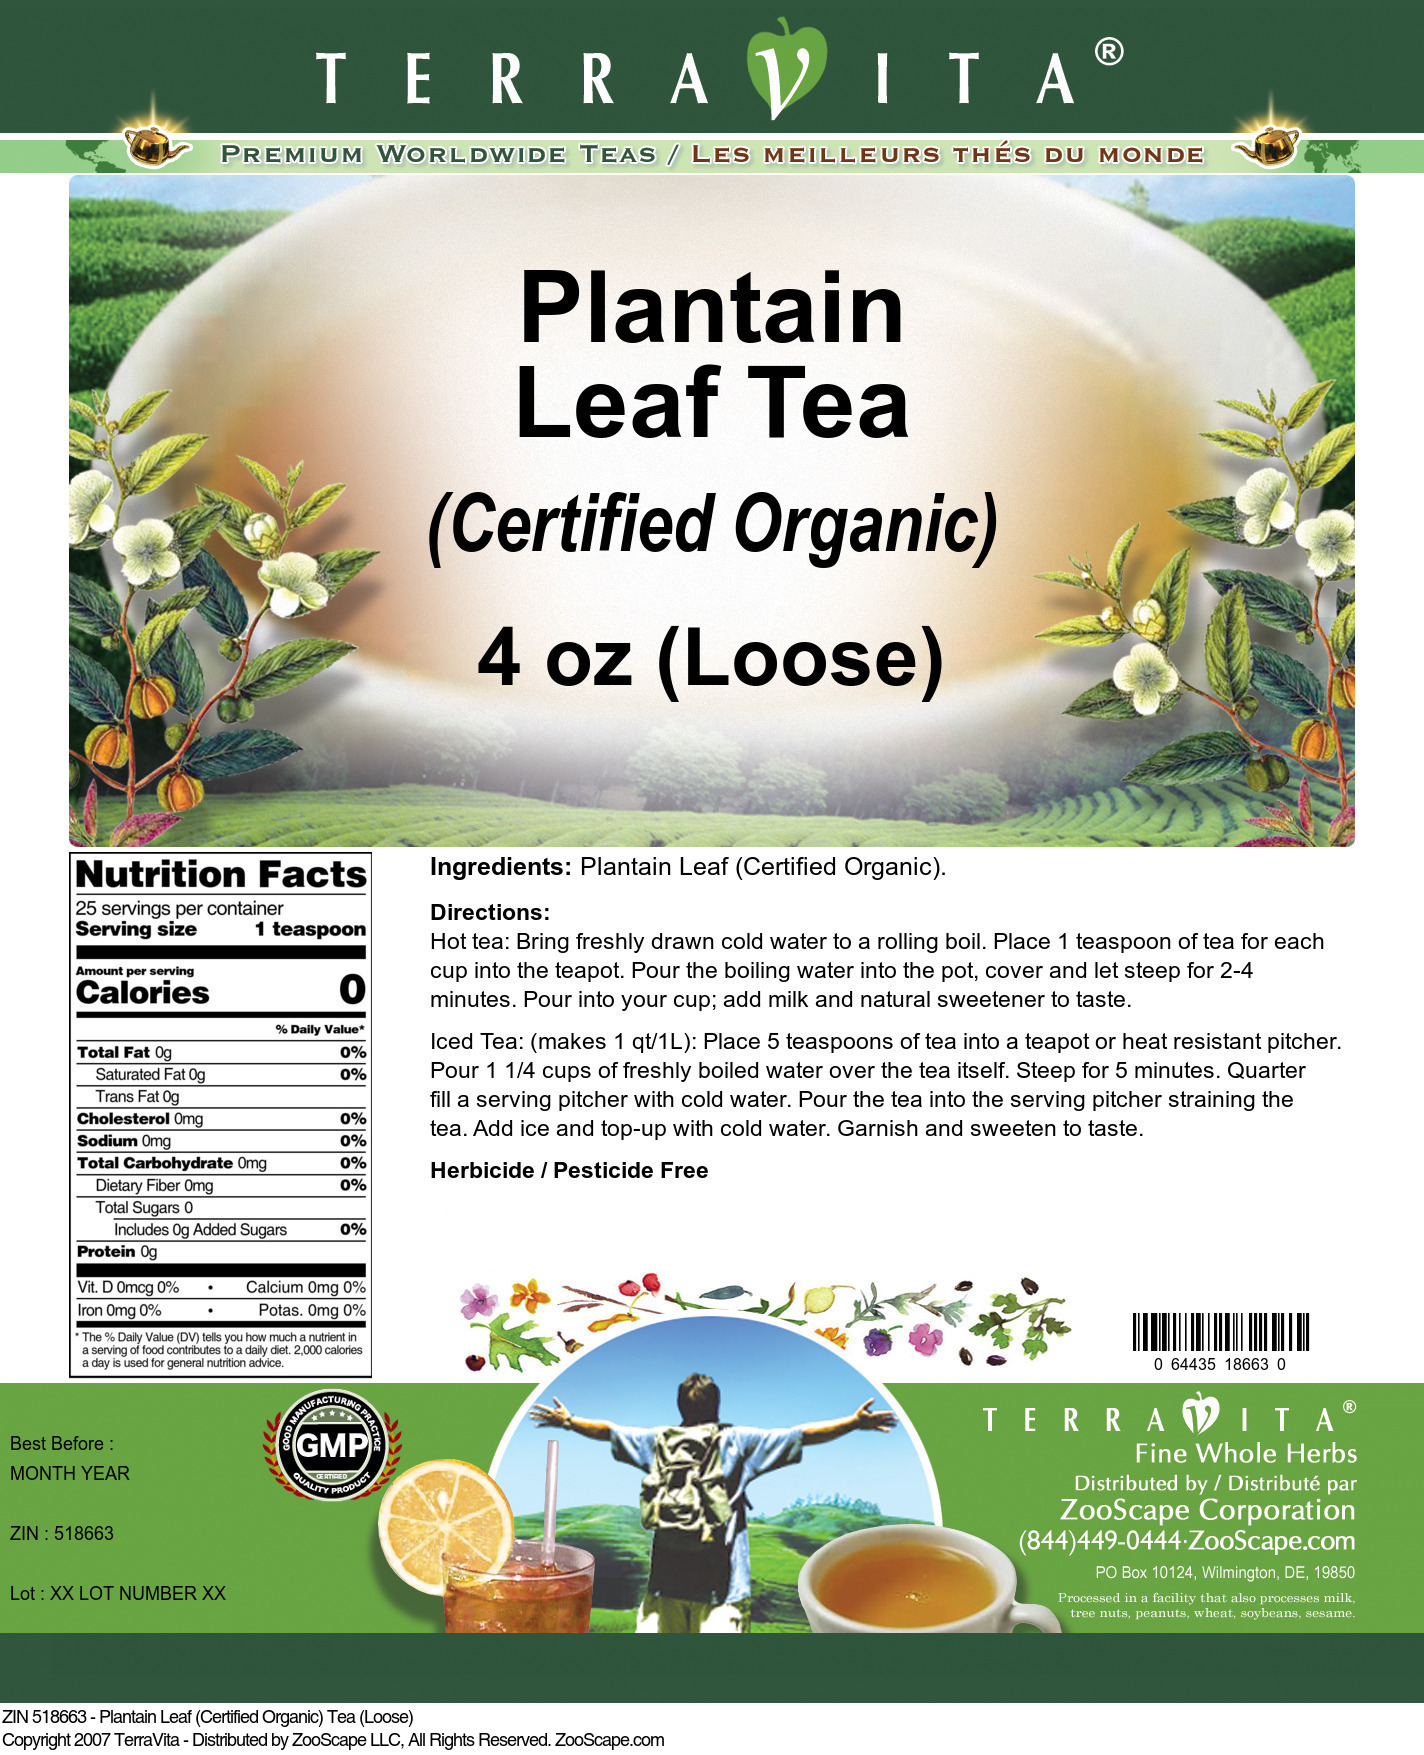 Plantain Leaf (Certified Organic) Tea (Loose) - Label